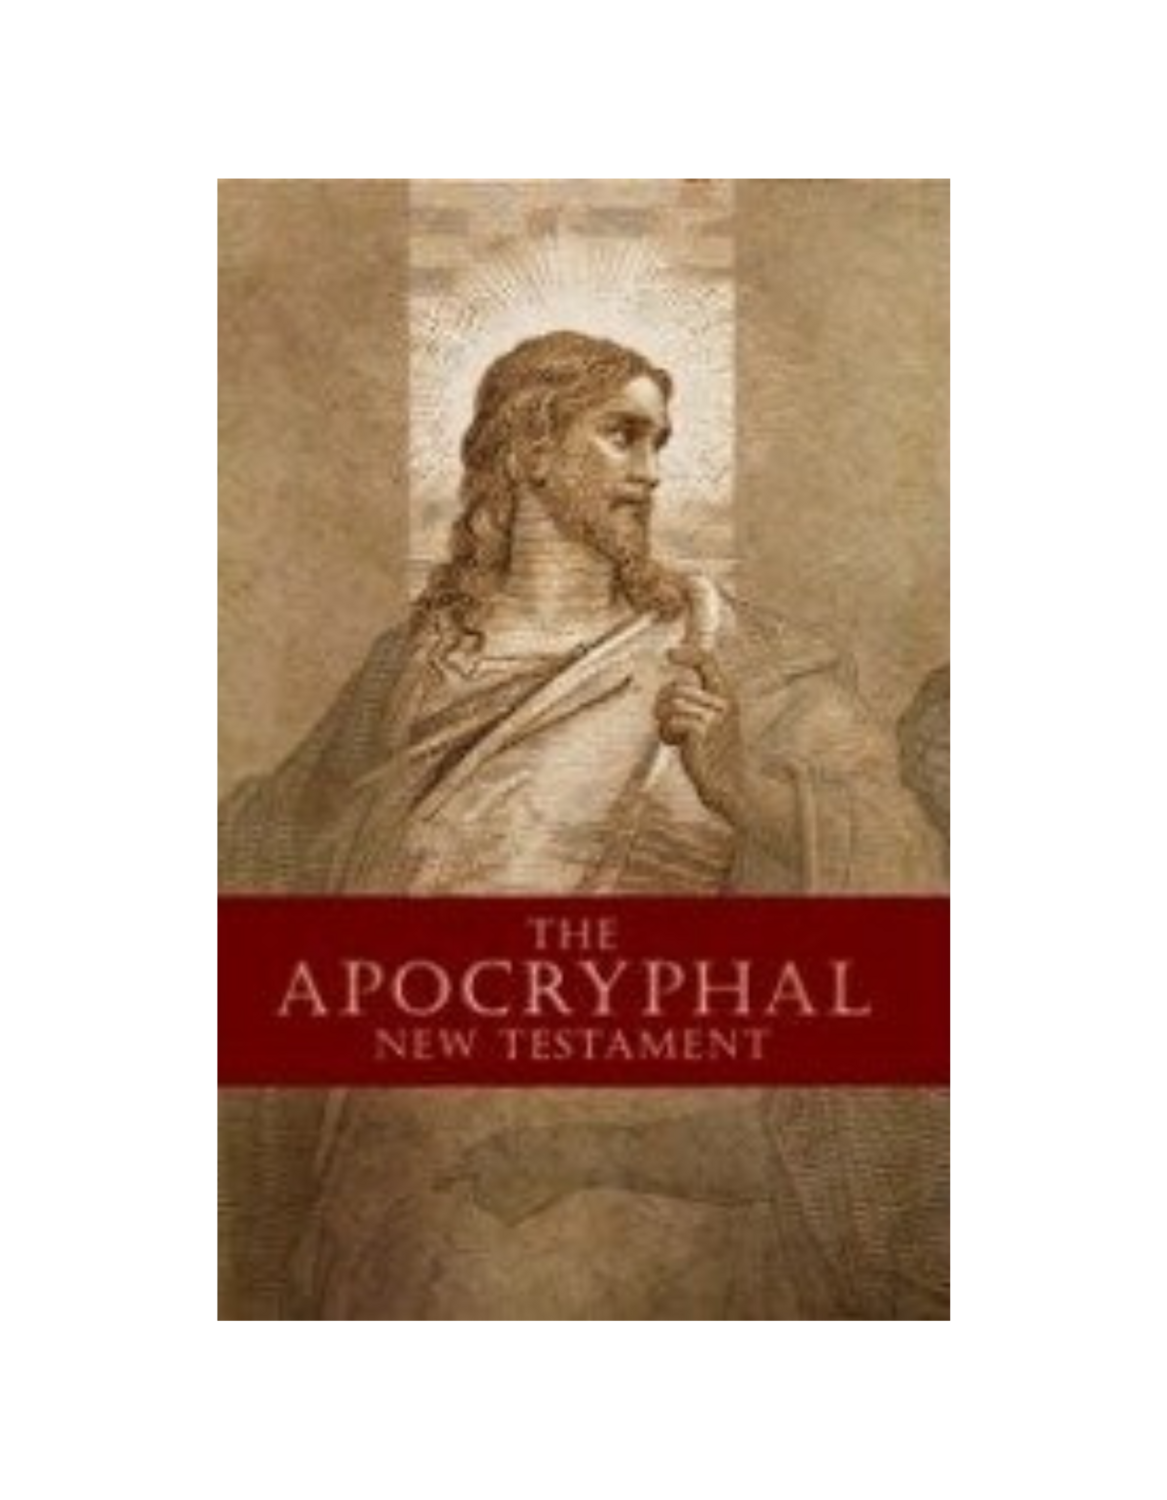 Apocryphal New Testament, The (1820)